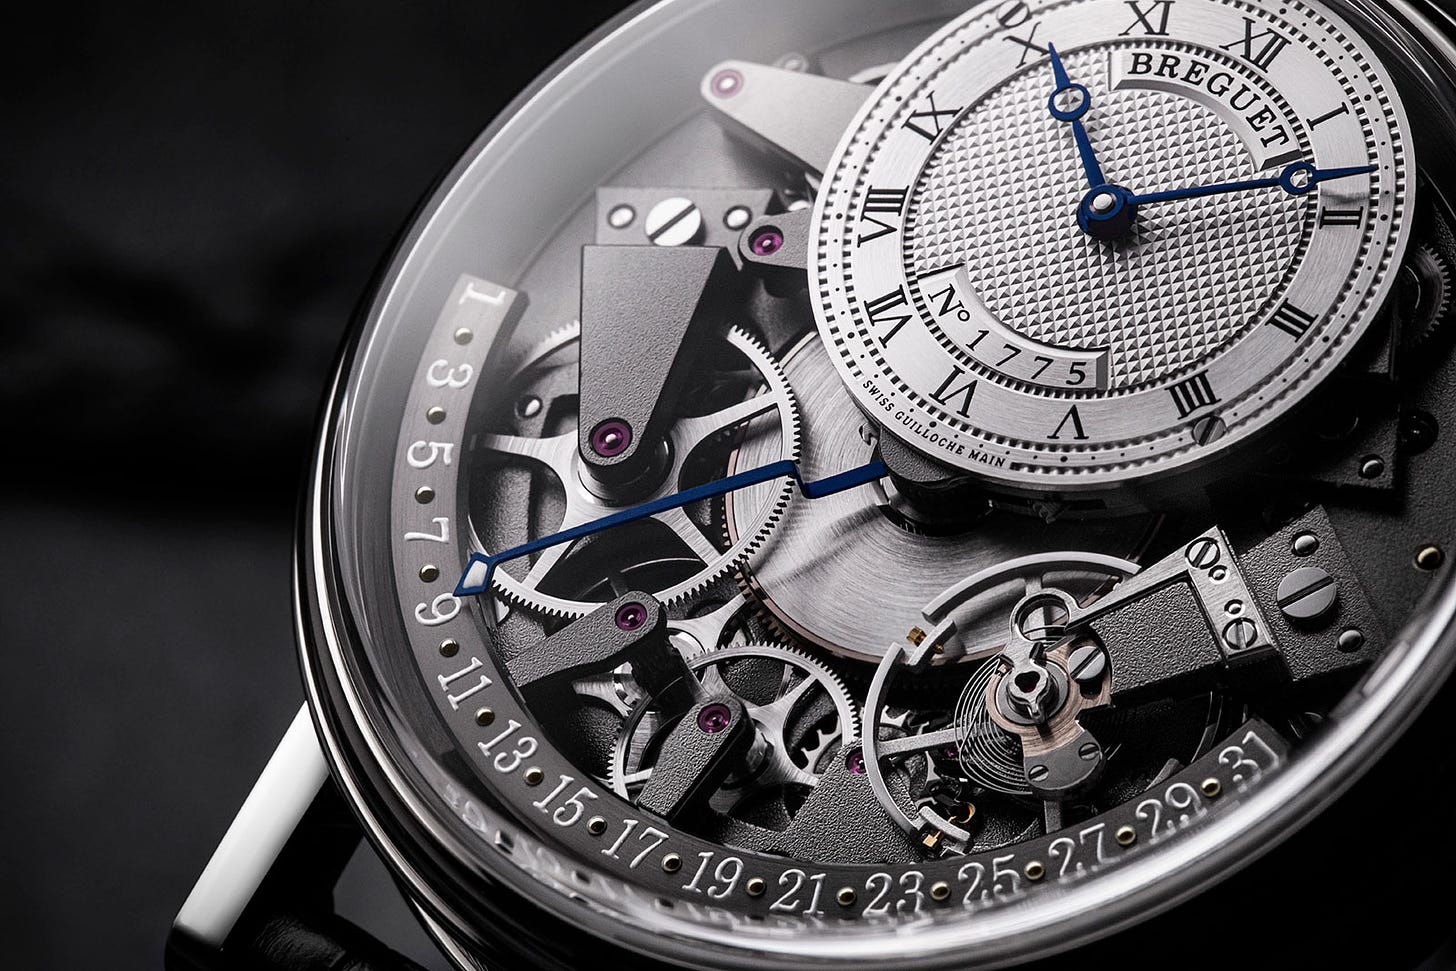 Breguet Introduces the Tradition Quantième Retrograde 7597 | SJX Watches